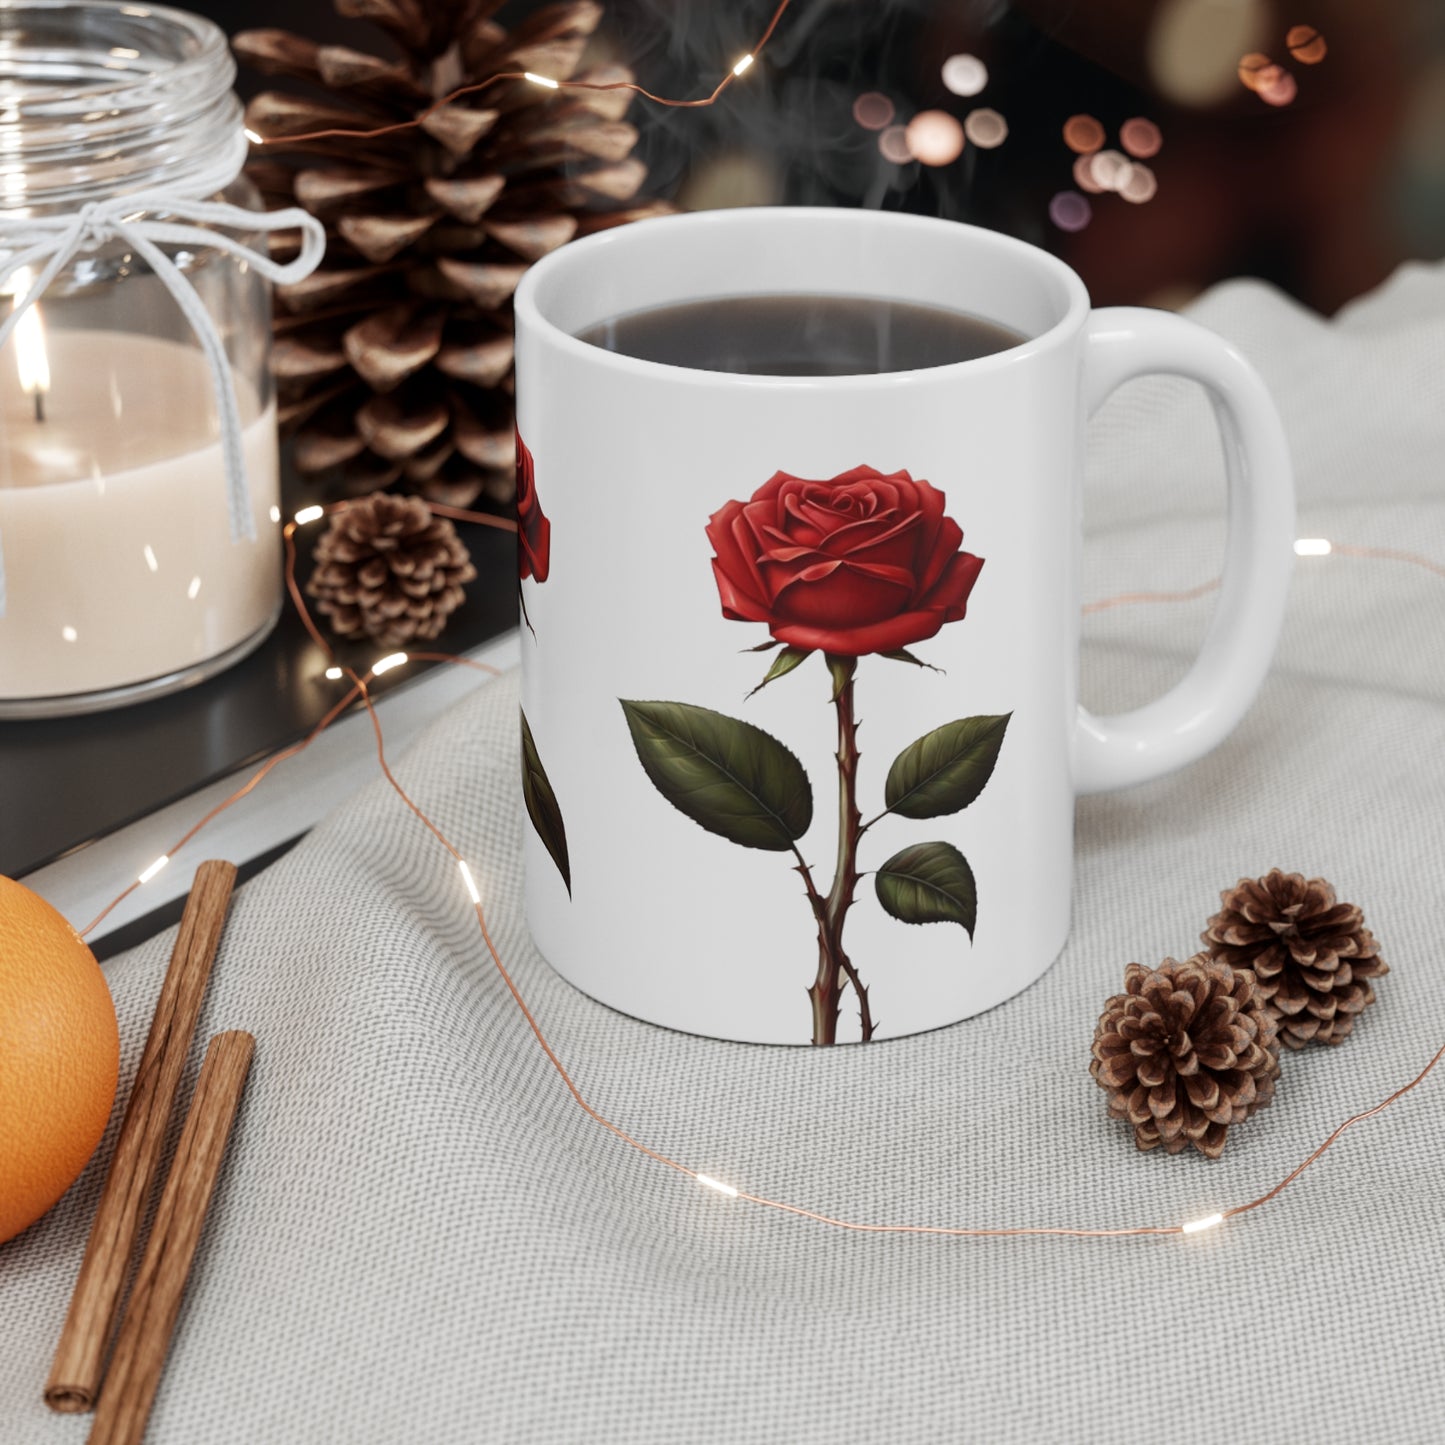 Red Roses Mug - Ceramic Coffee Mug 11oz